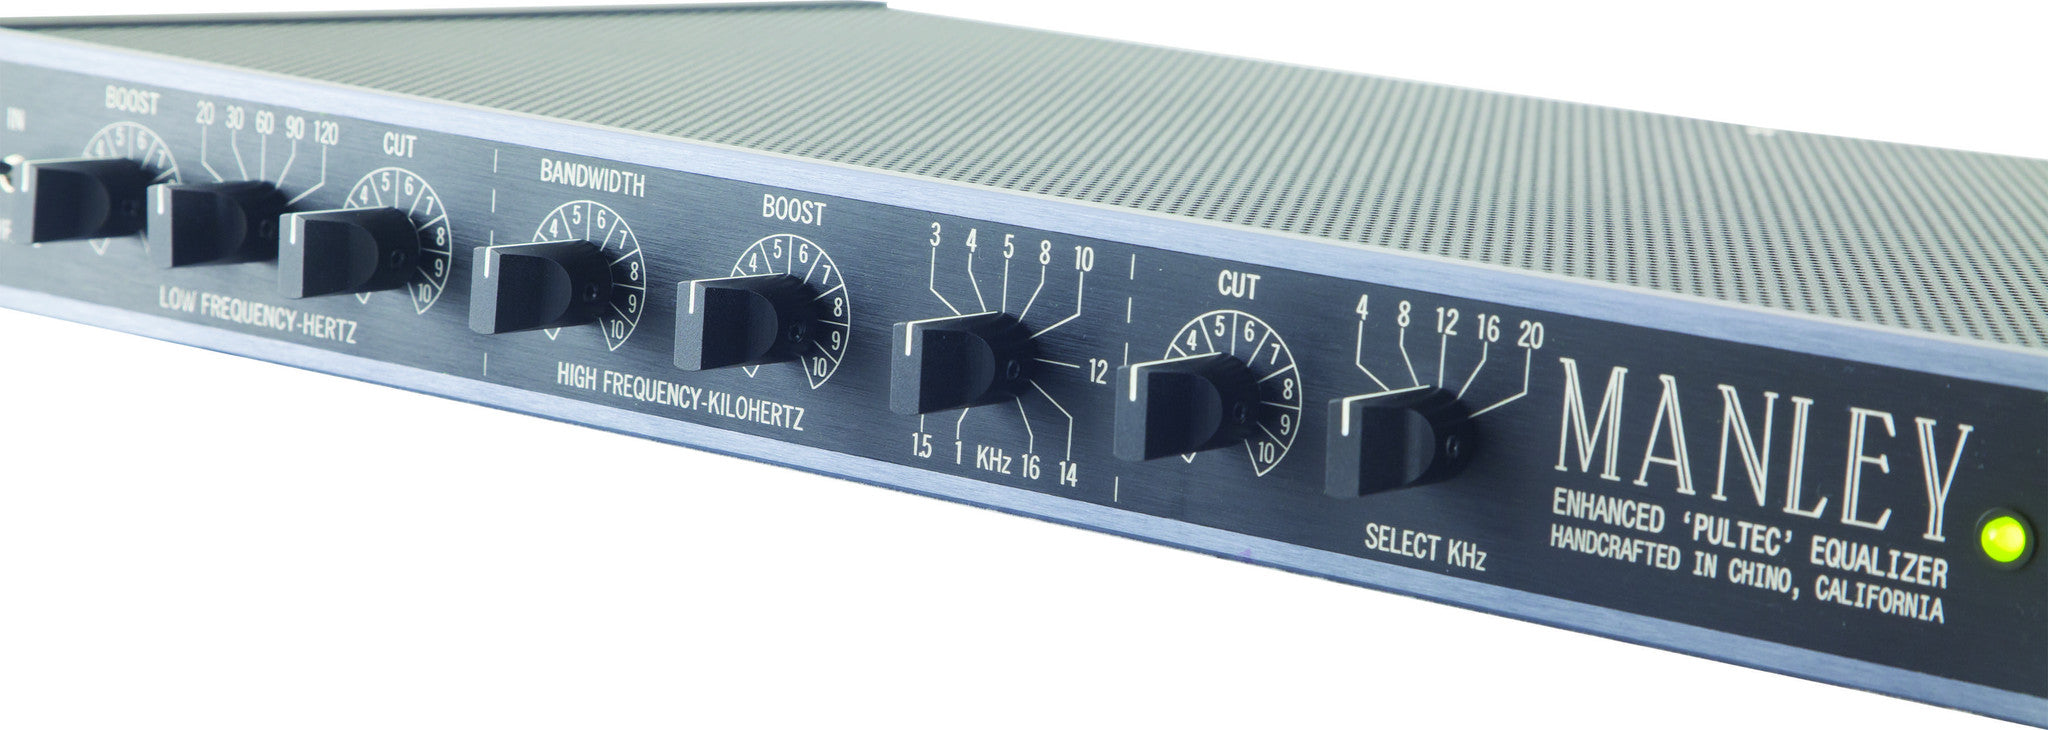 Recording Equipment - Manley - Manley Enhanced Pultec Equalizer - Professional Audio Design, Inc